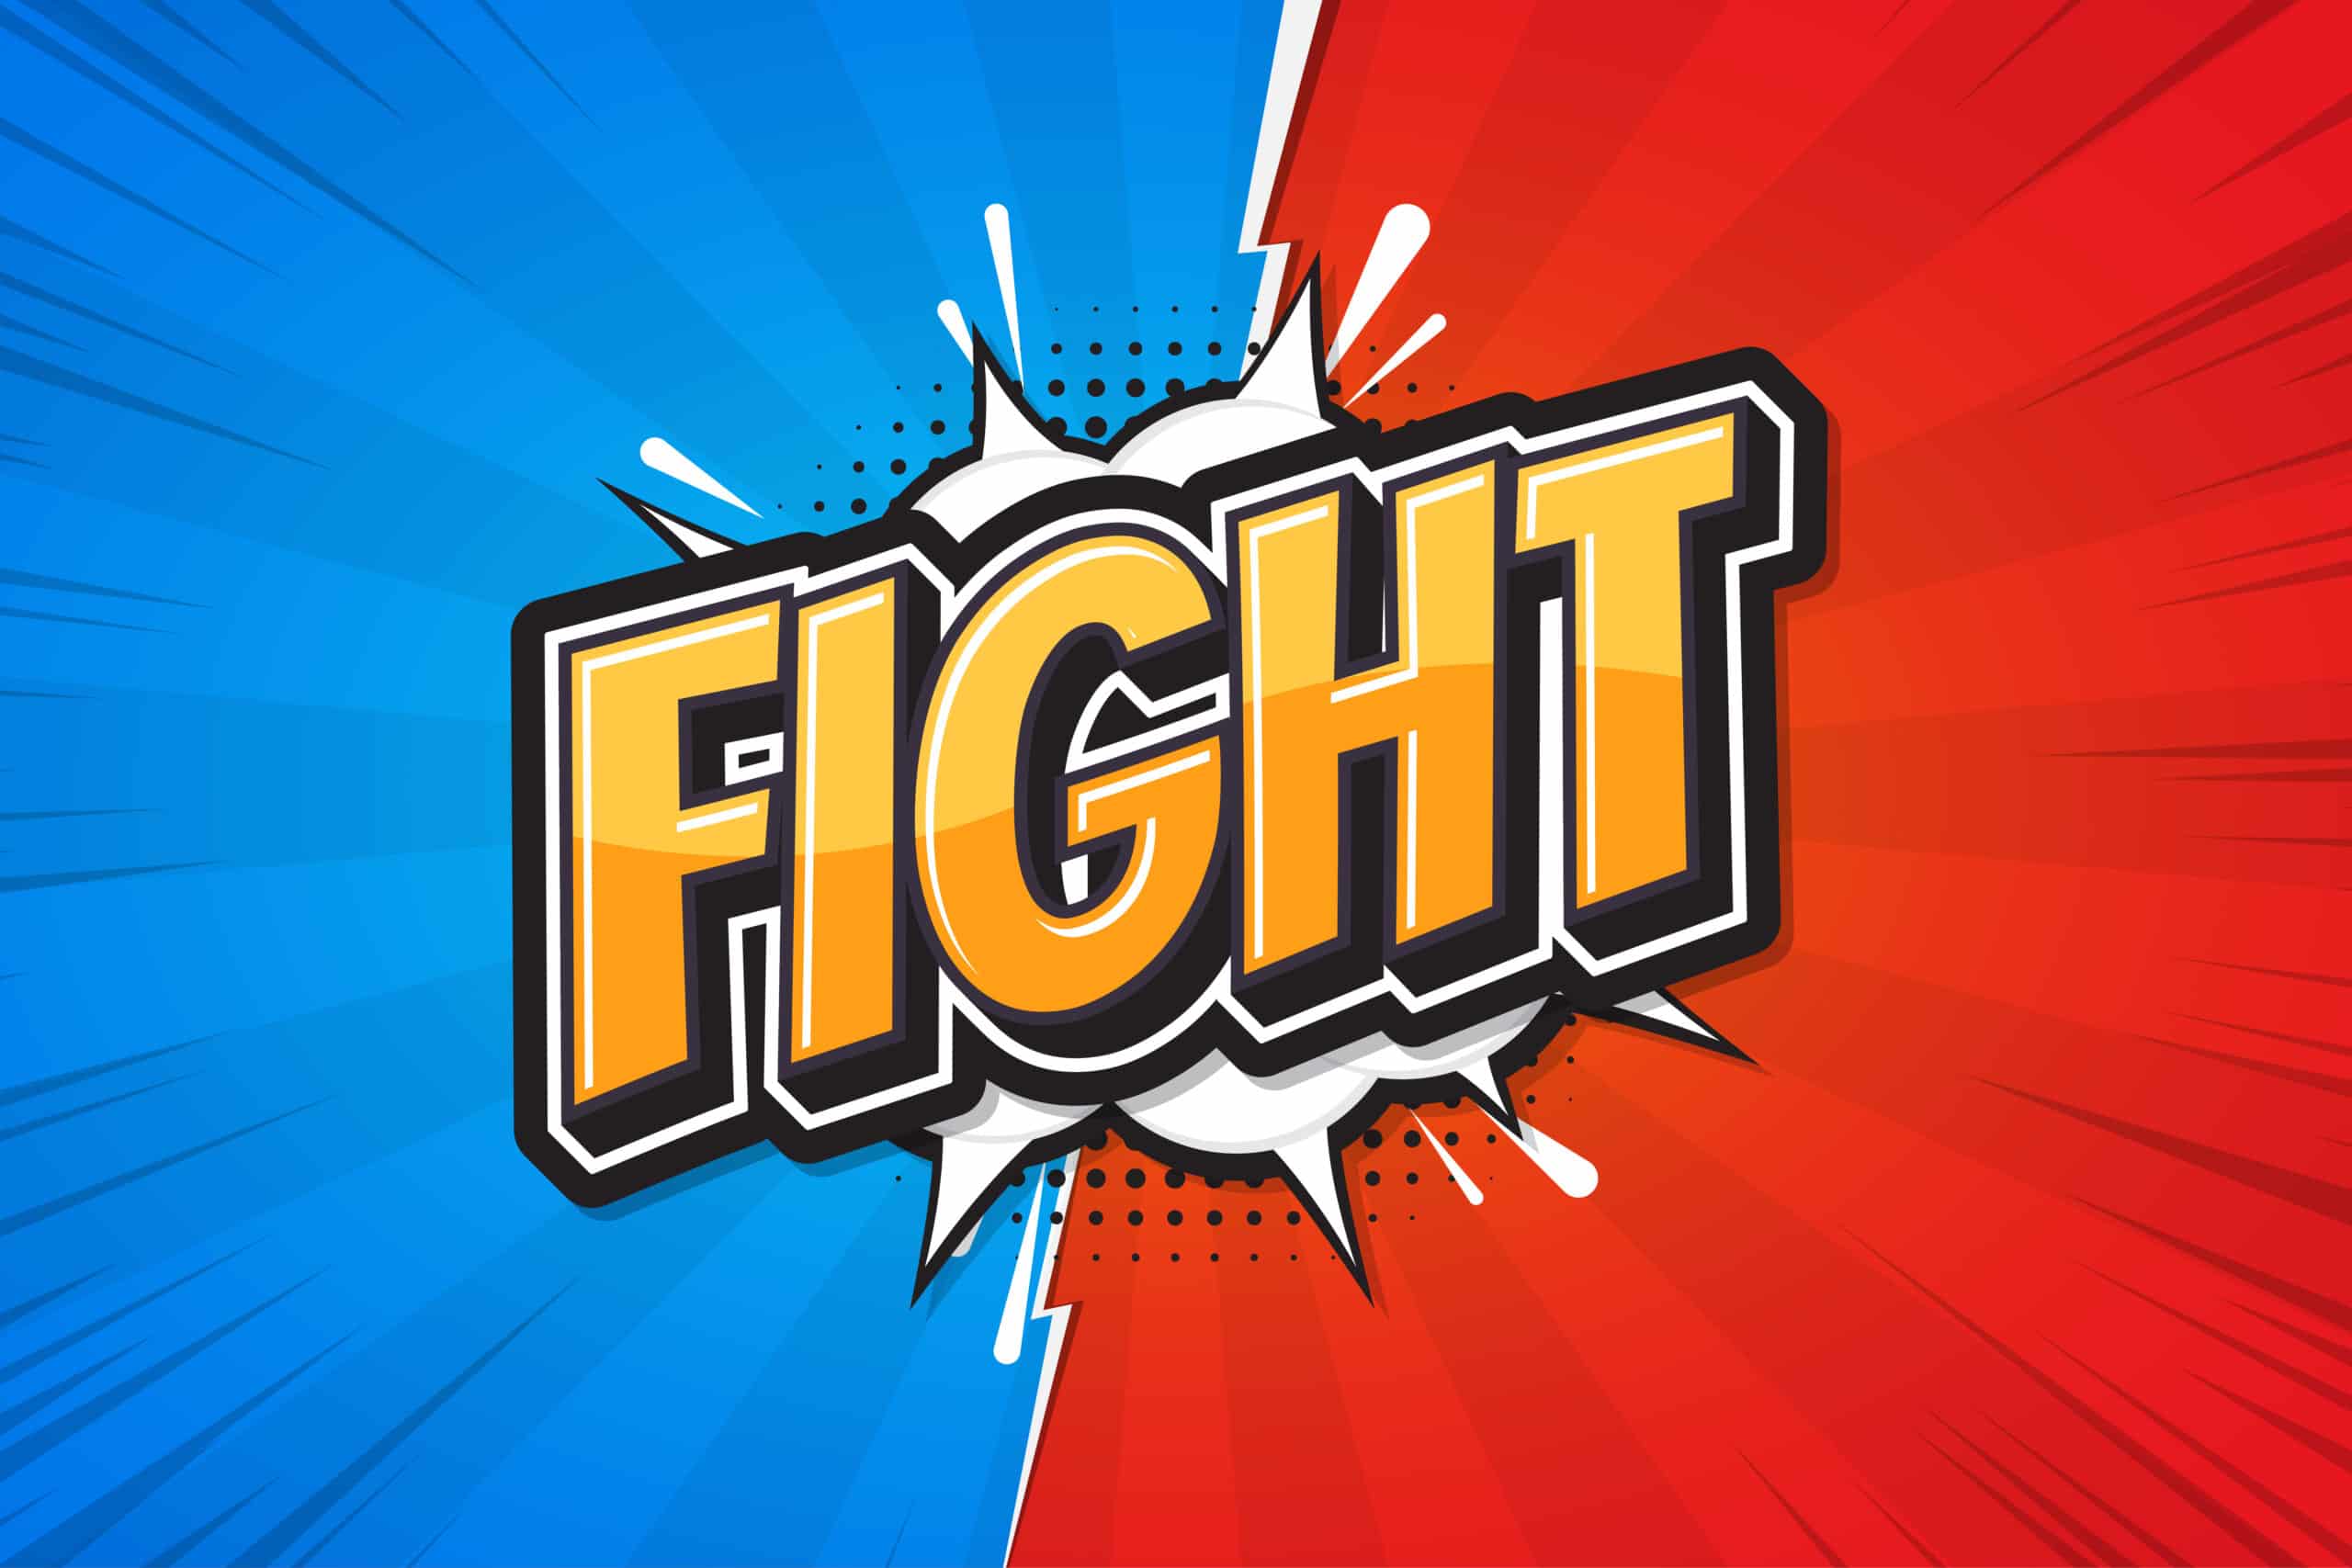 Street Fighter fight logo